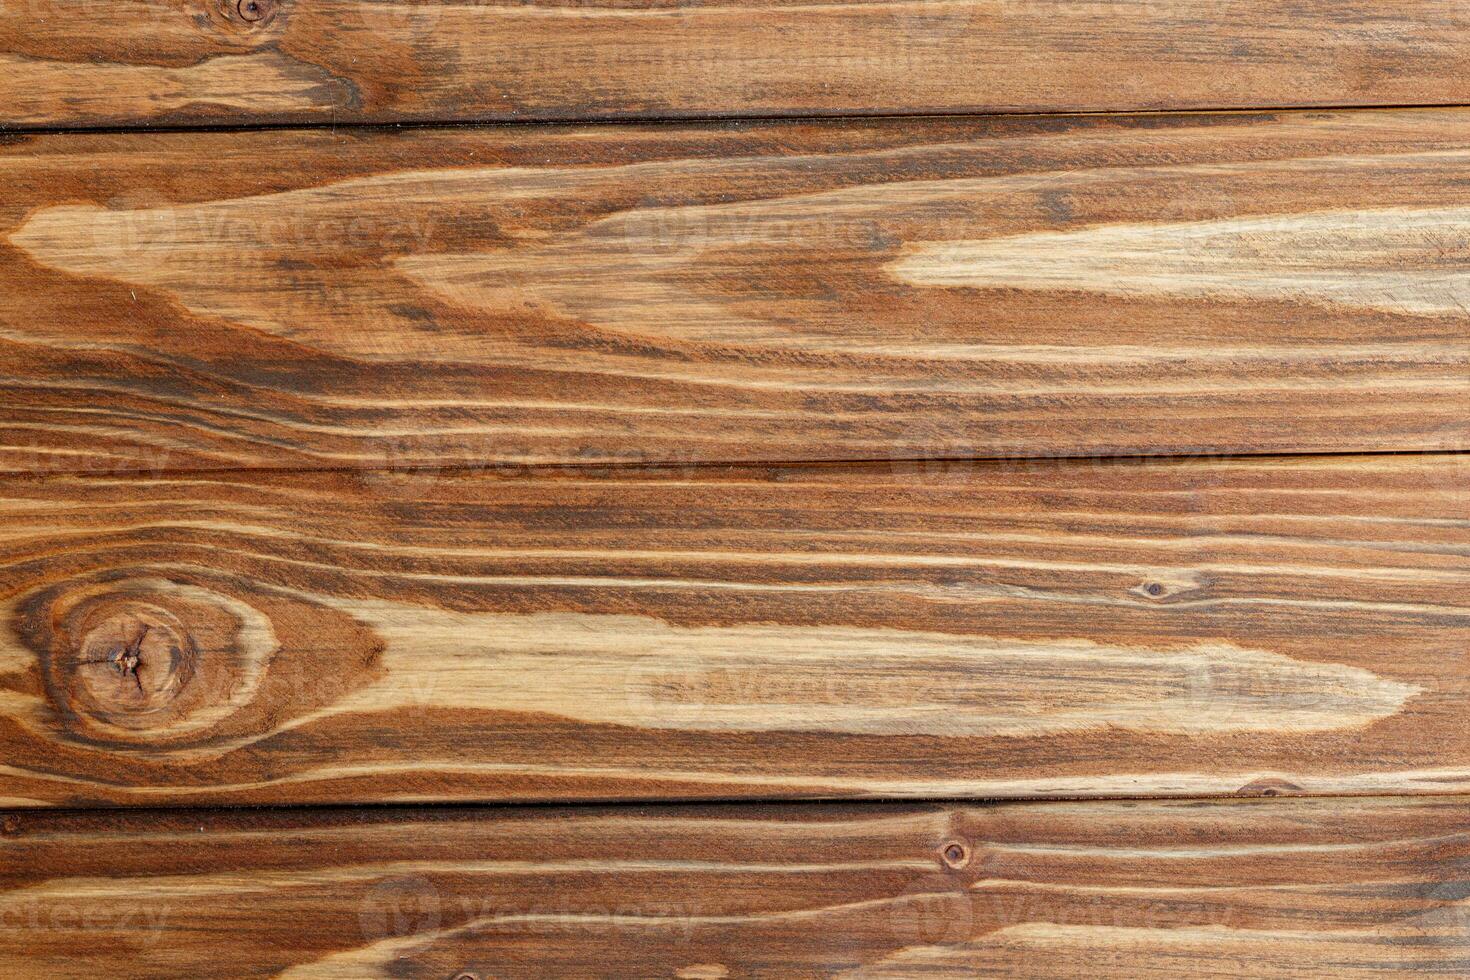 marron Contexte avec bois texture photo